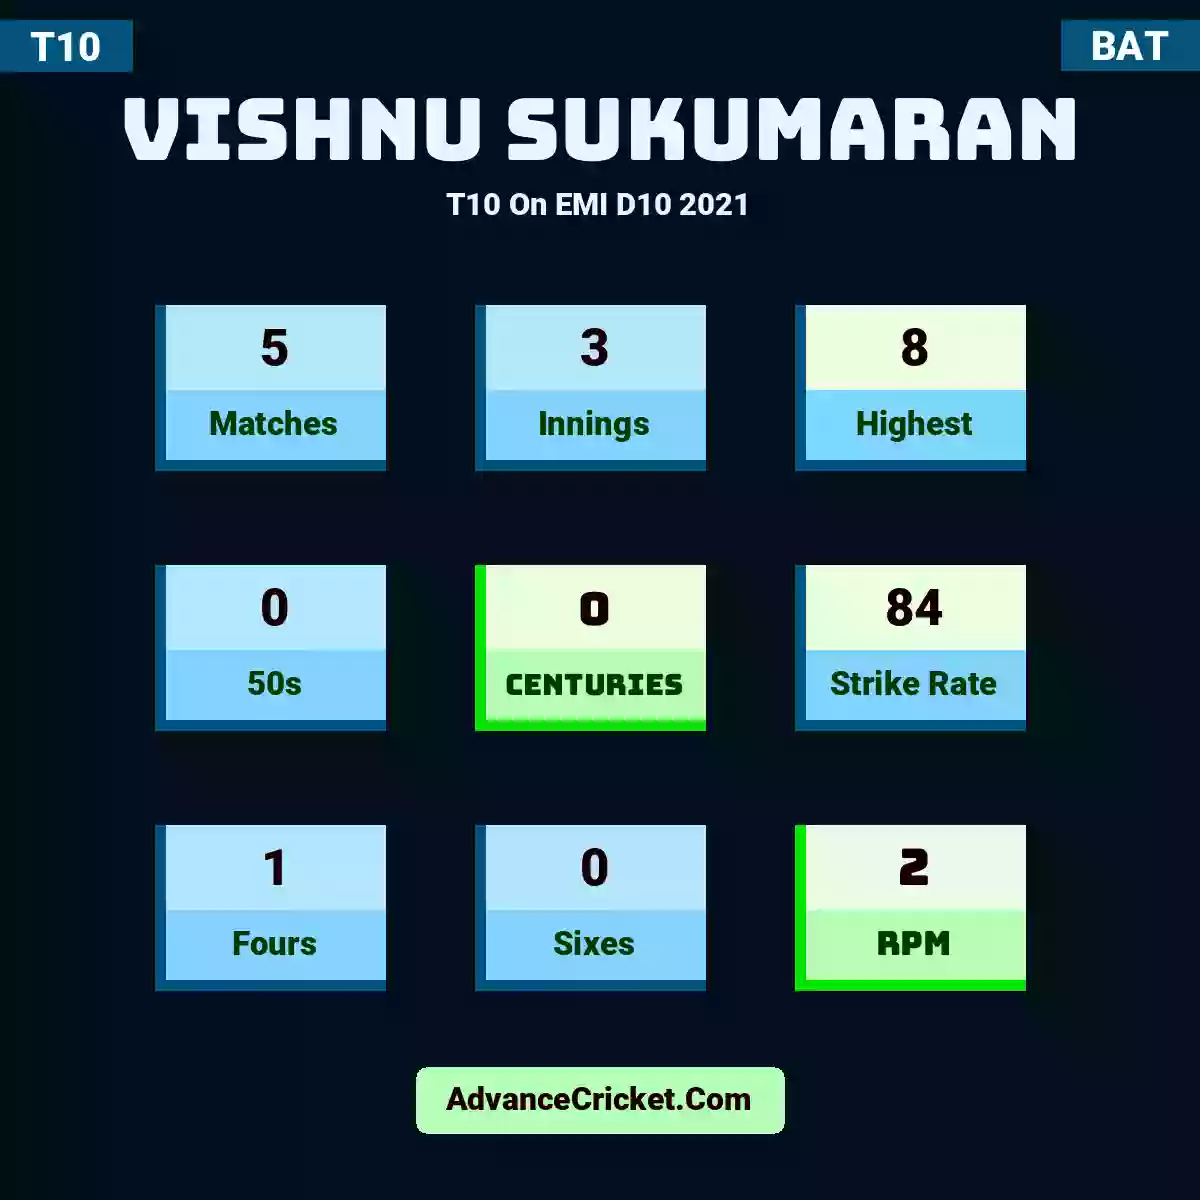 Vishnu Sukumaran T10  On EMI D10 2021, Vishnu Sukumaran played 5 matches, scored 8 runs as highest, 0 half-centuries, and 0 centuries, with a strike rate of 84. V.Sukumaran hit 1 fours and 0 sixes, with an RPM of 2.